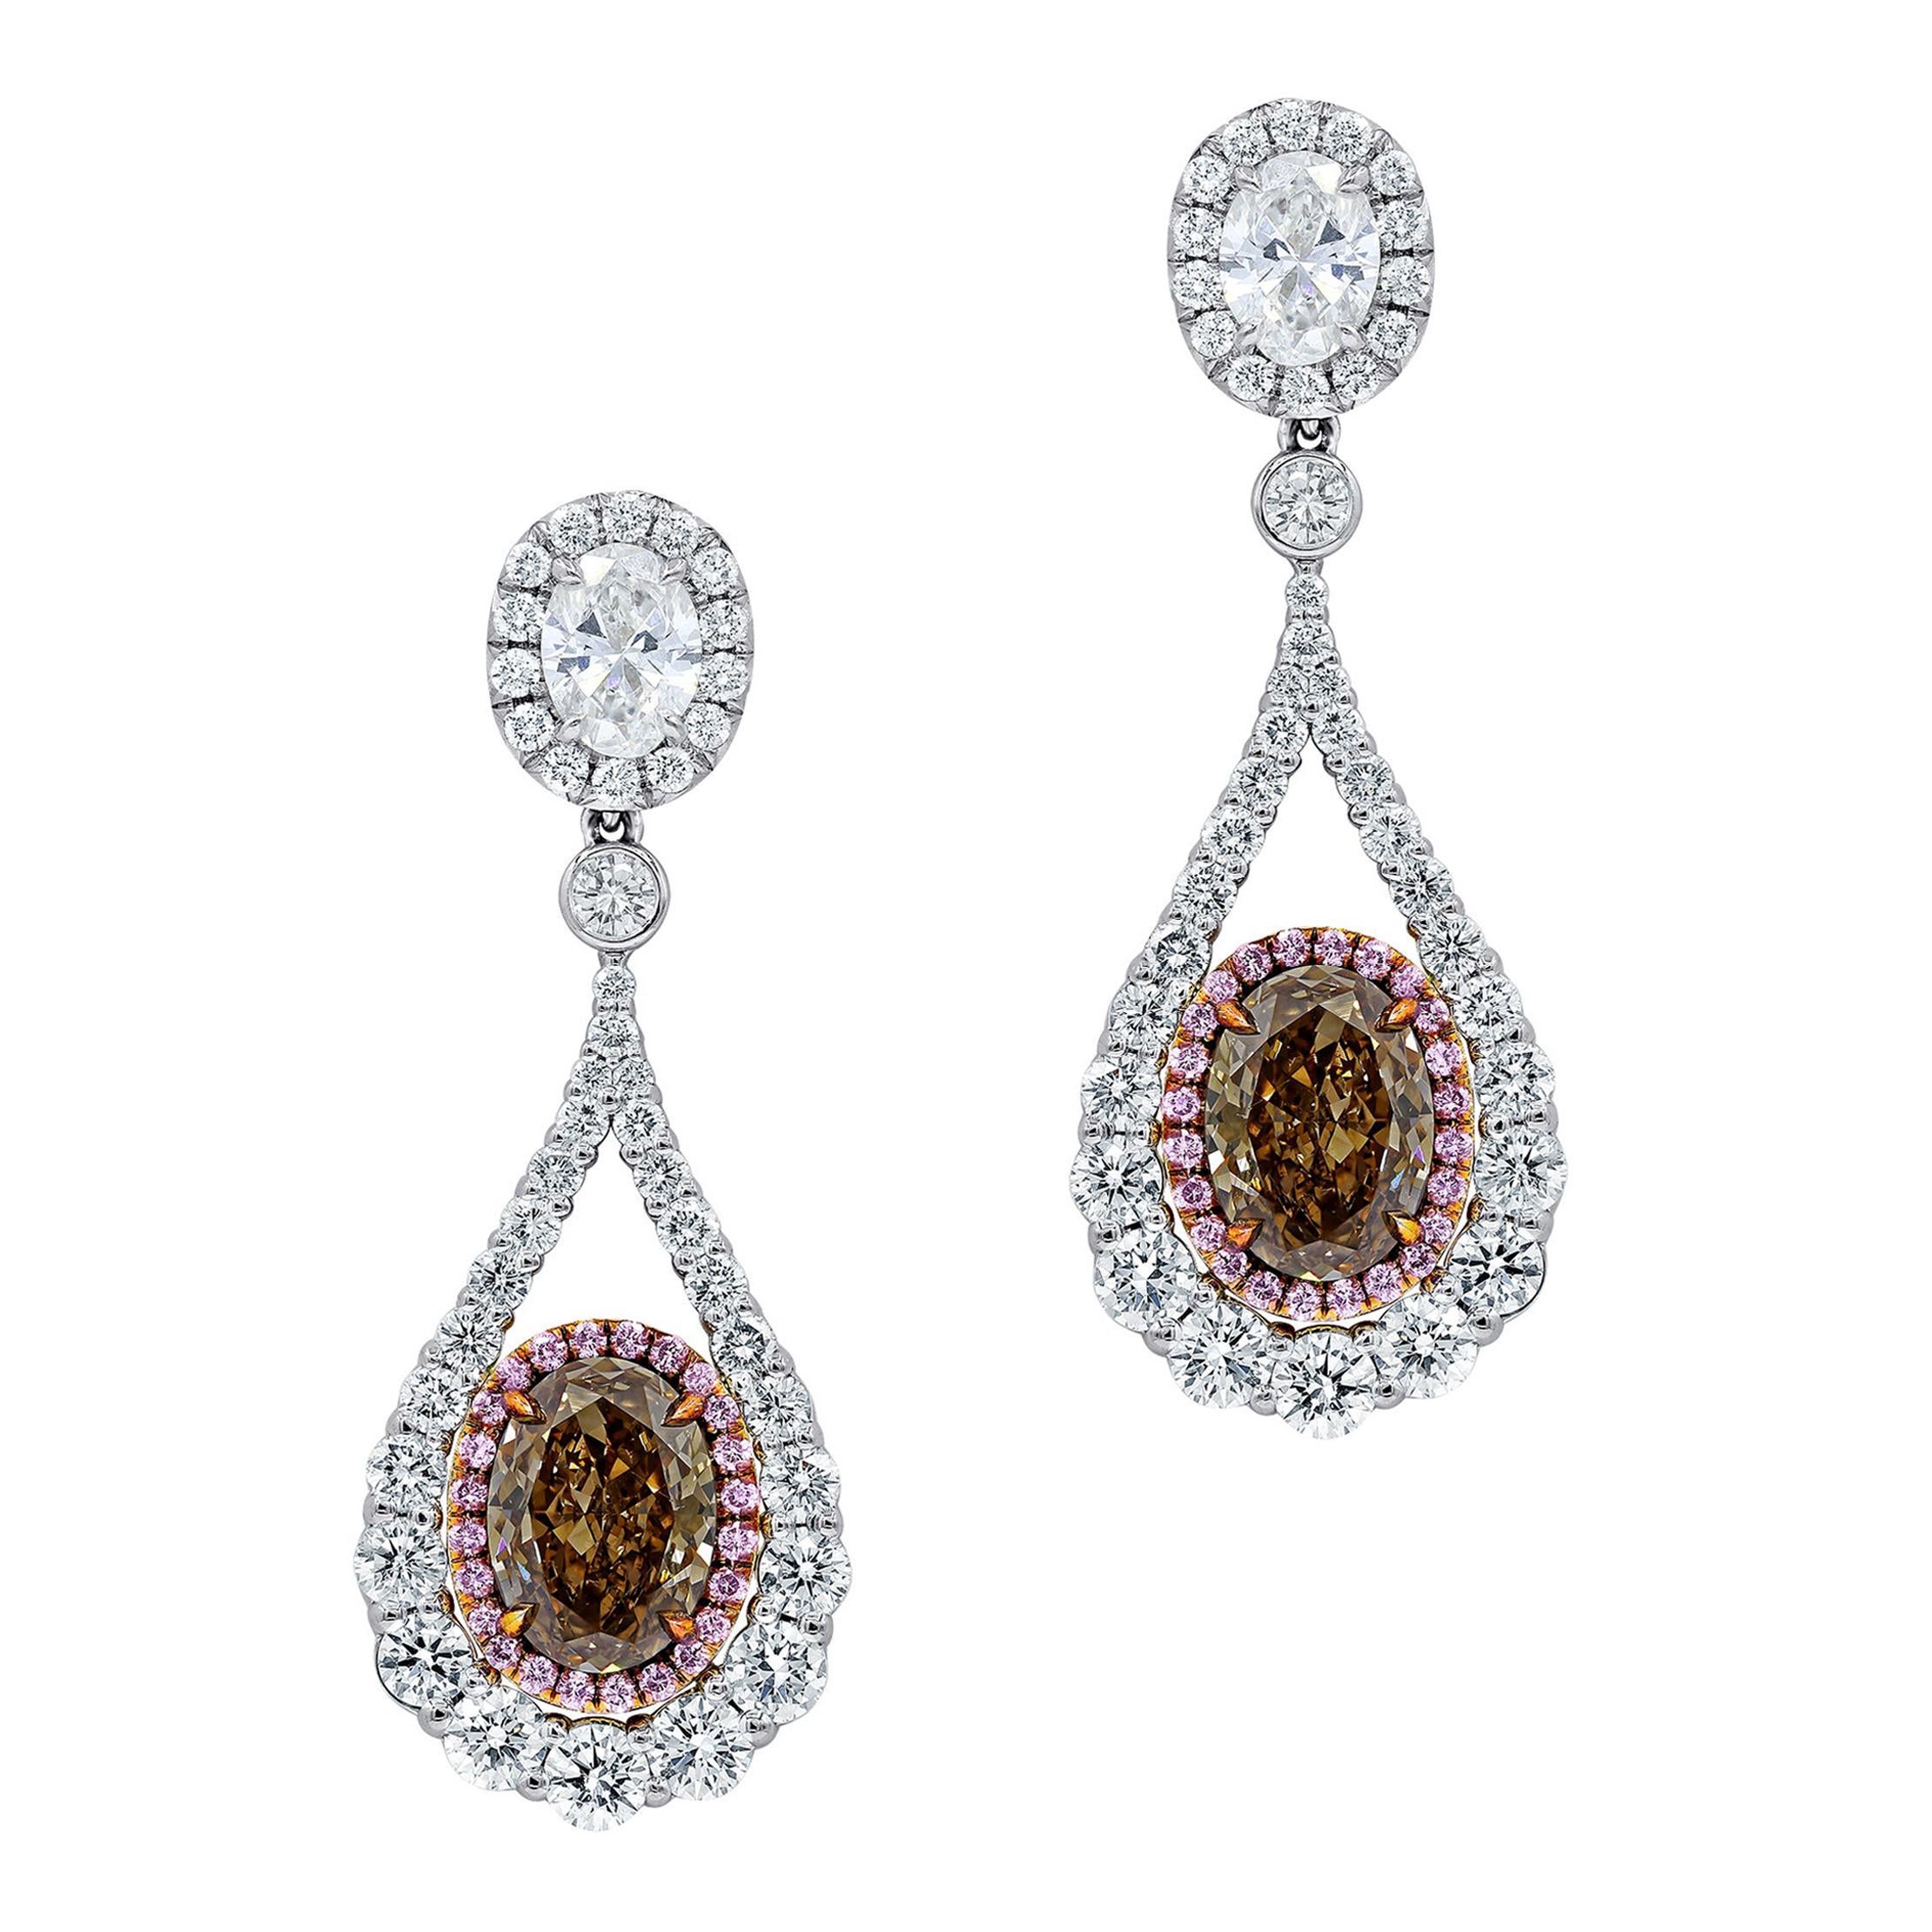 Platinum Diamond Earrings with 5.40ct of Total Diamond